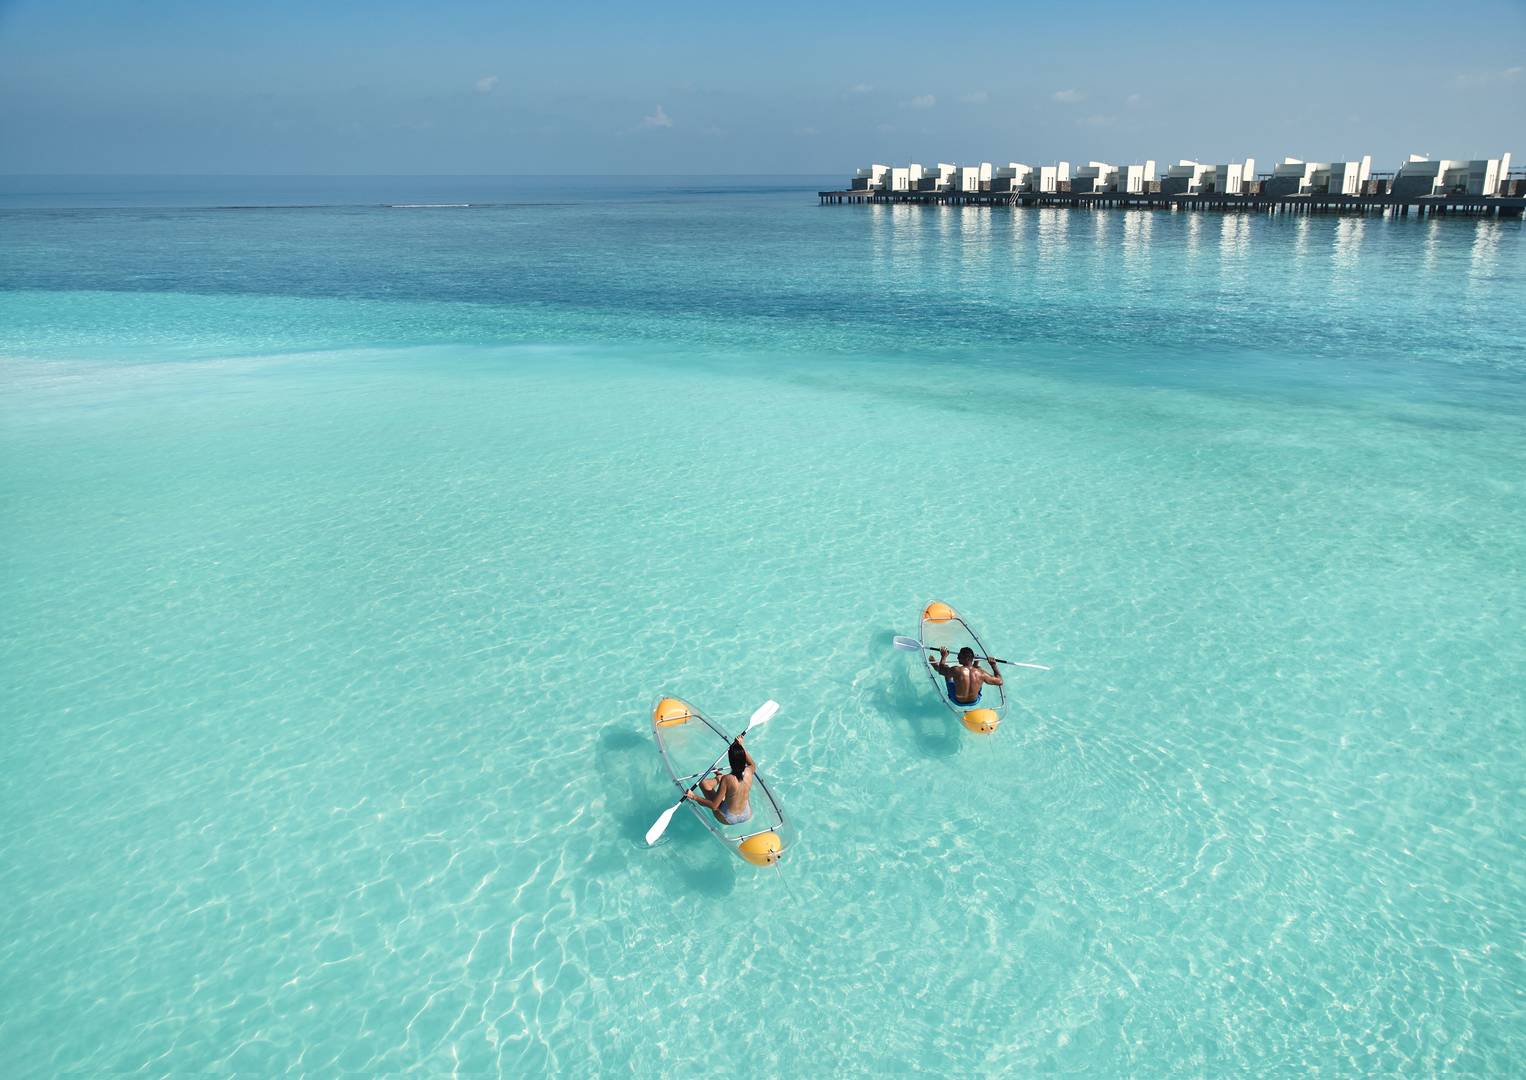 https://cdn.jumeirah.com/-/mediadh/dh/hospitality/jumeirah/article/stories/maldives/soar-and-explore-in-the-maldives/highresolution300dpijumeirah-maldives--island-lagoon-glass-kayak-aerial-view.jpg?h=1080&w=1526